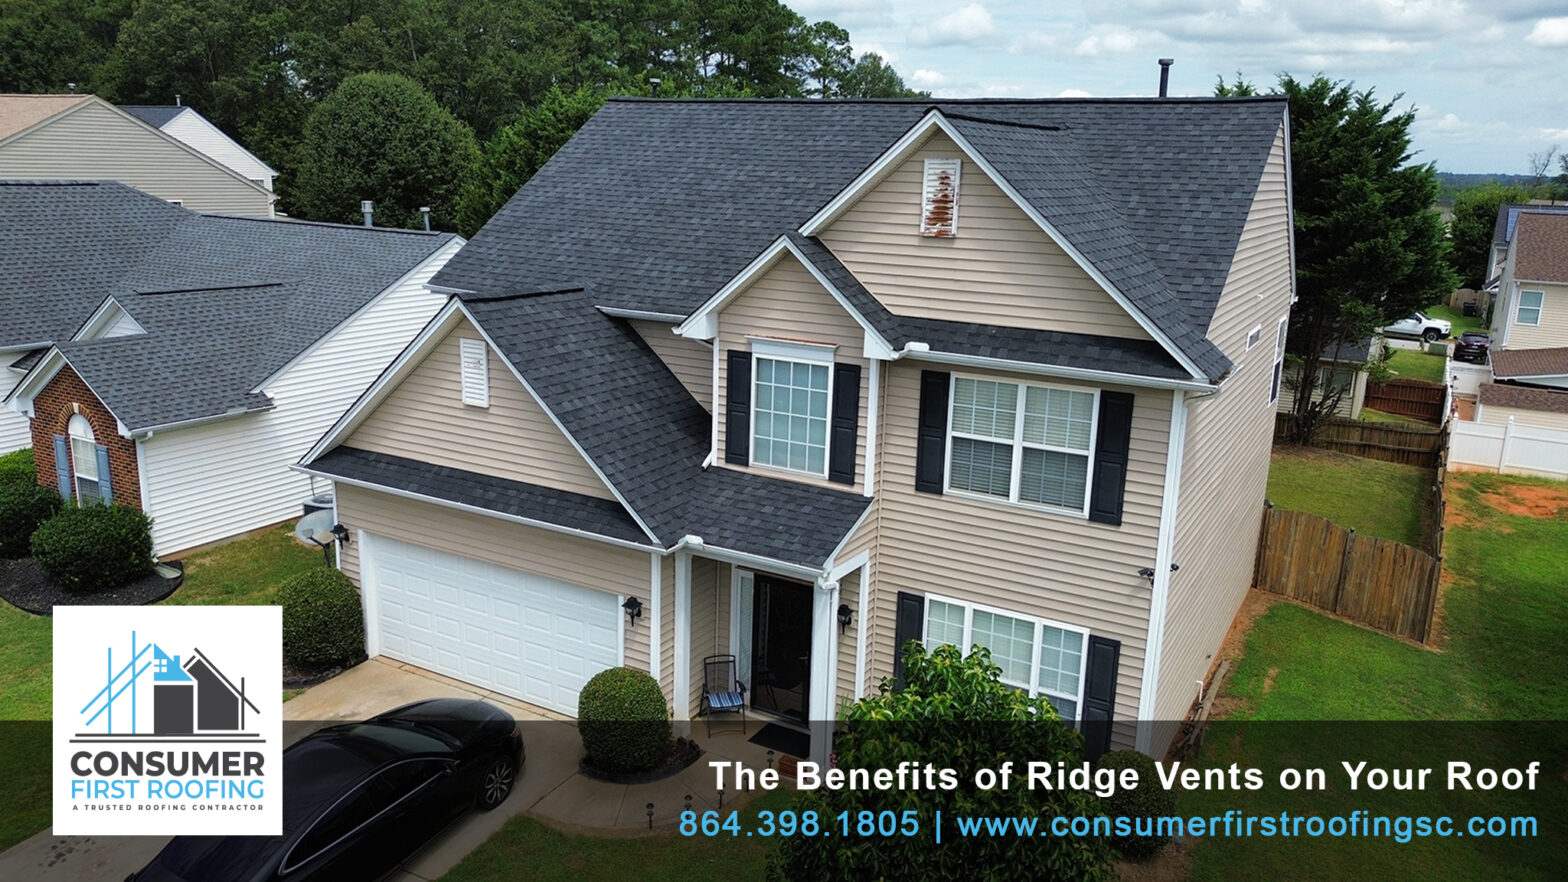 The Benefits of Roof Ridge Vents